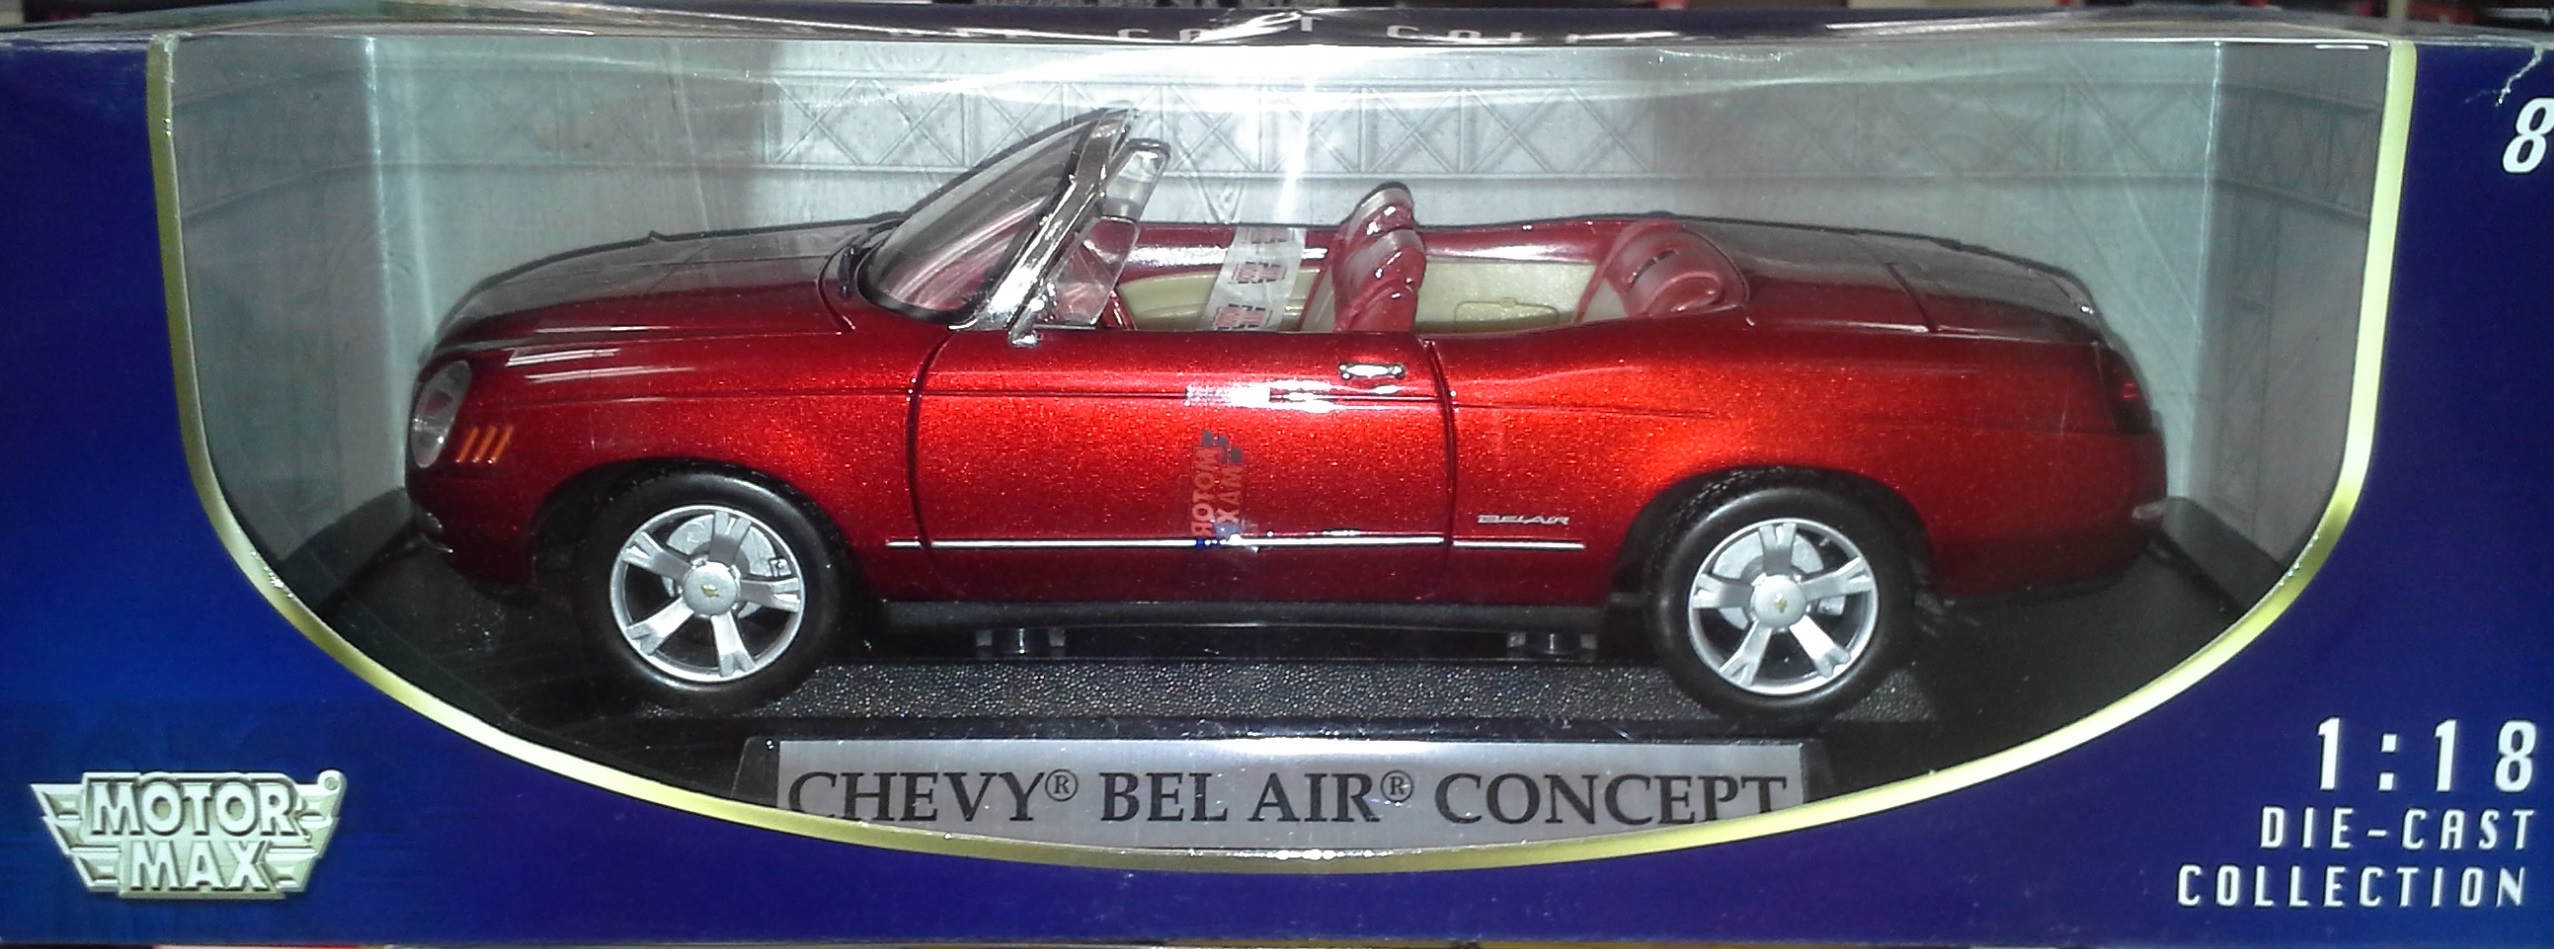 2002 Chevy Bel Air